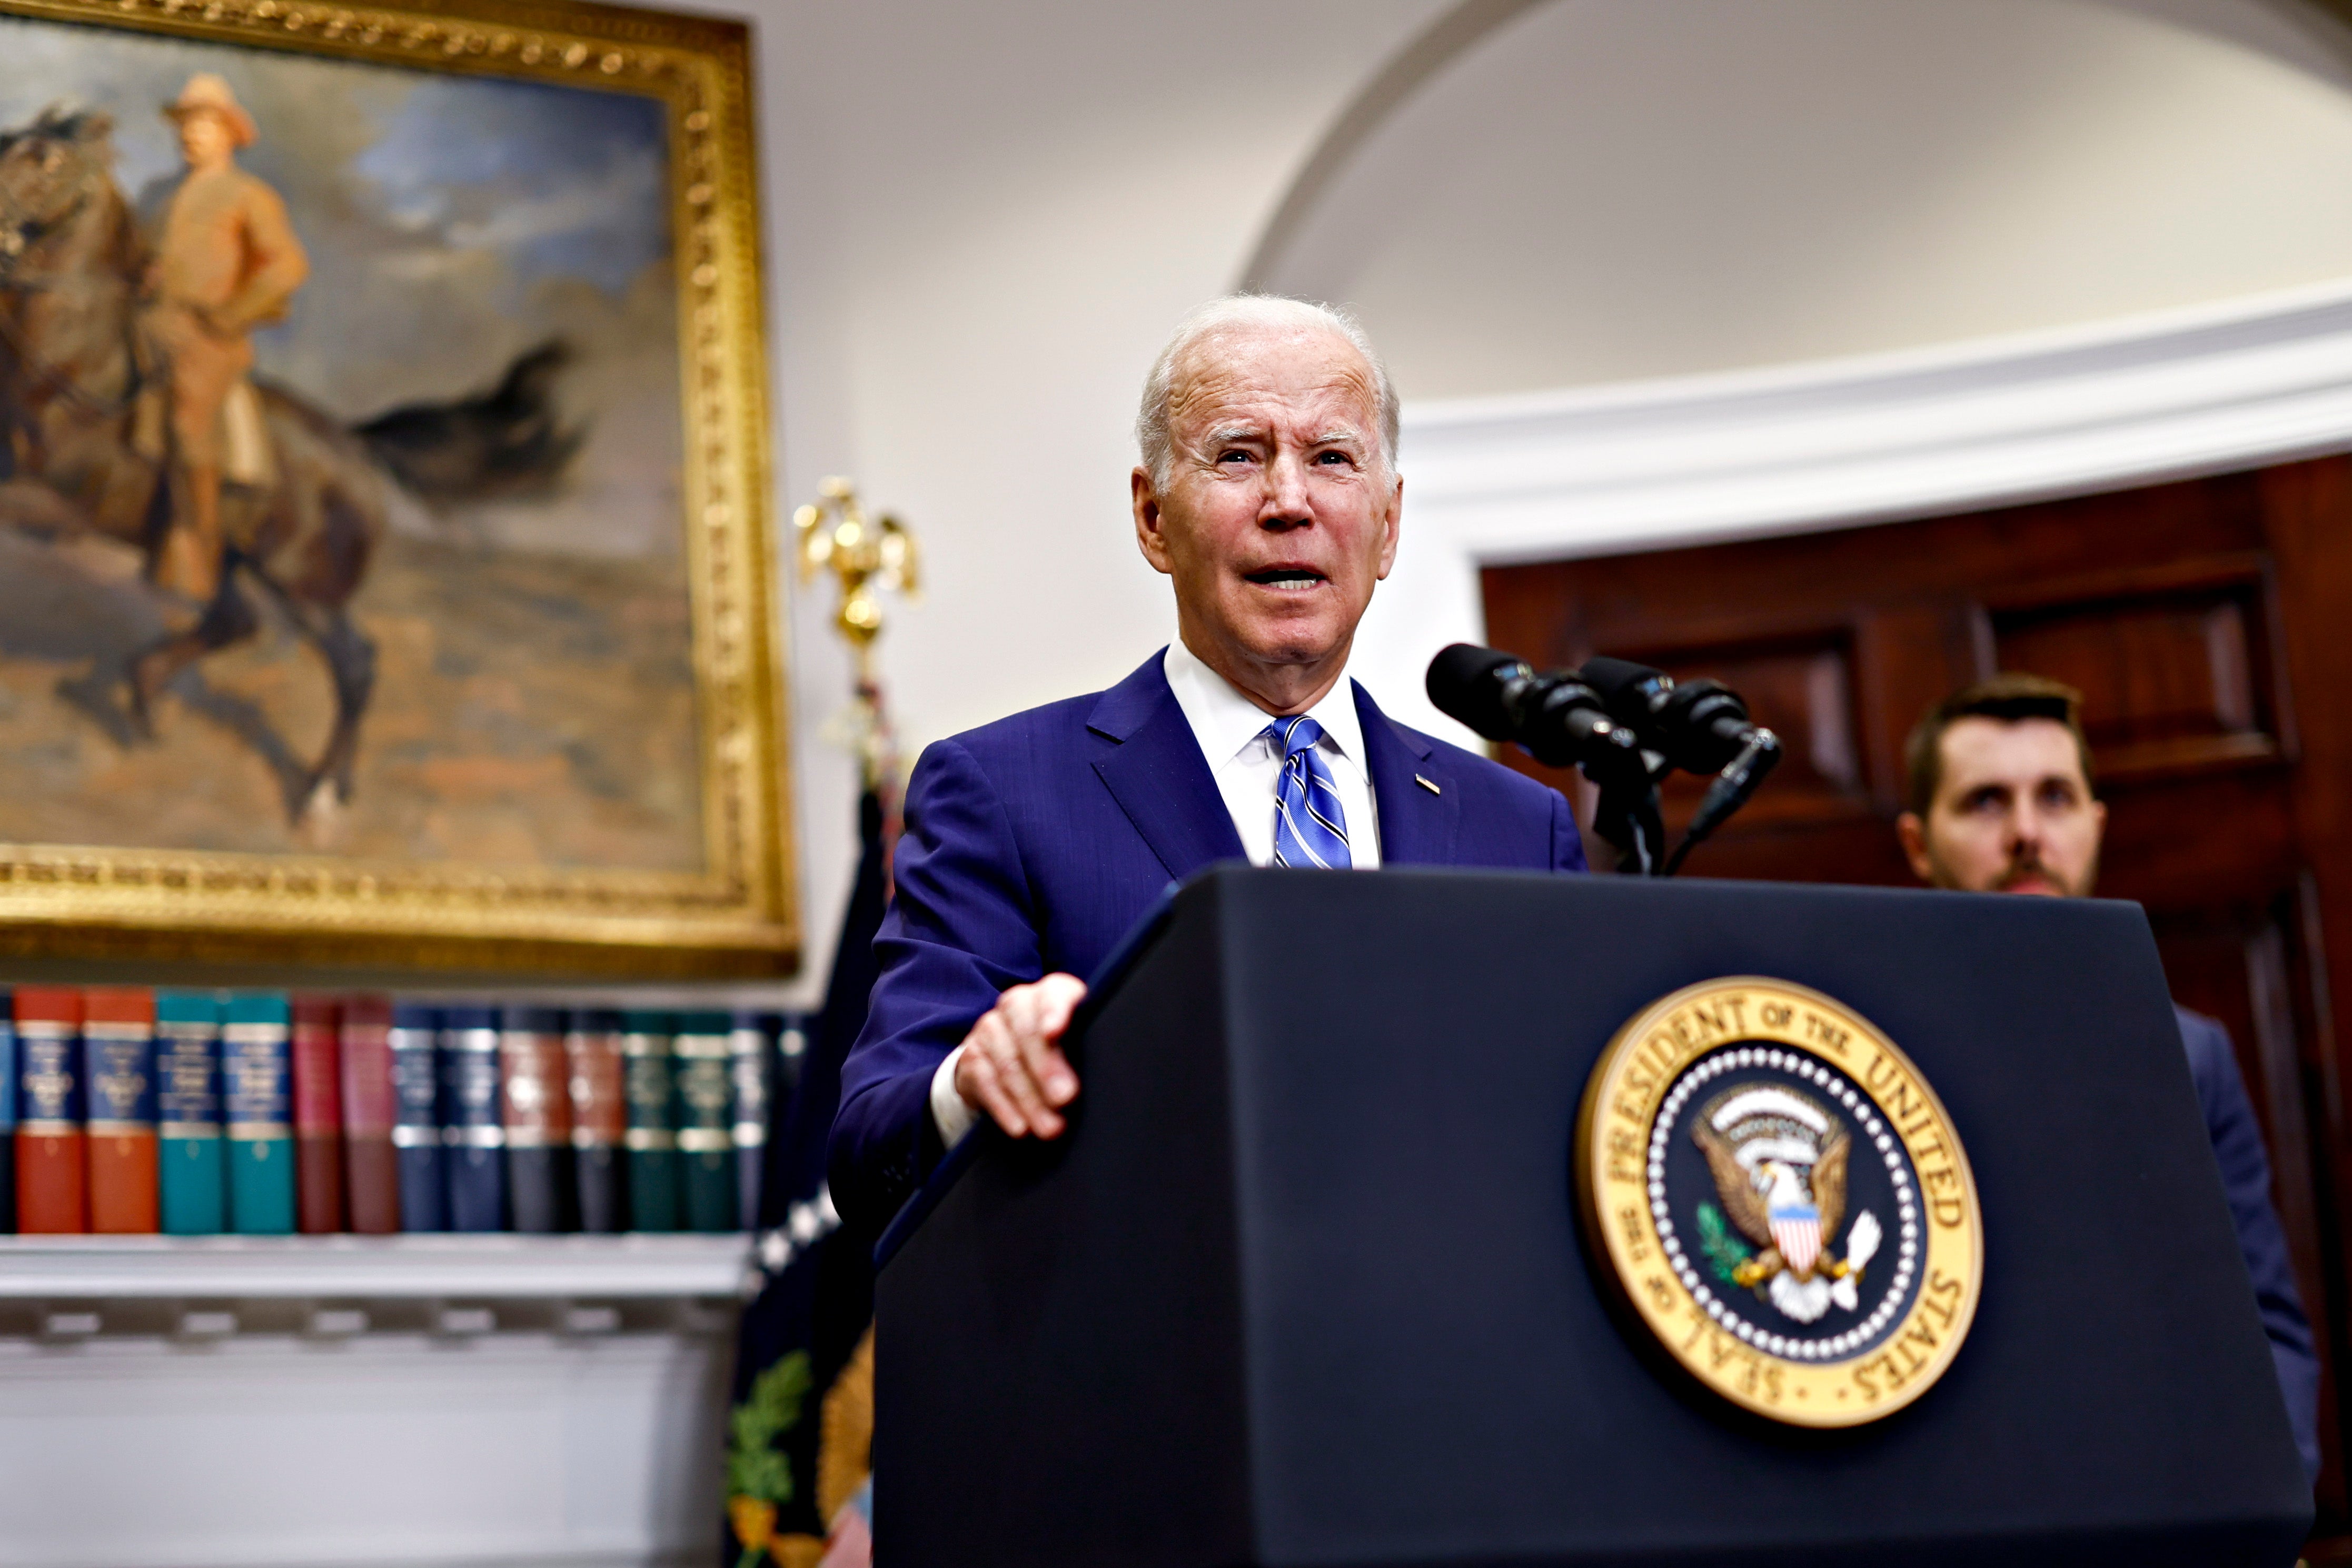 US President Joe Biden speaks in the Roosevelt Room of the White House in Washington, D.C., USA, 04 May 2022.